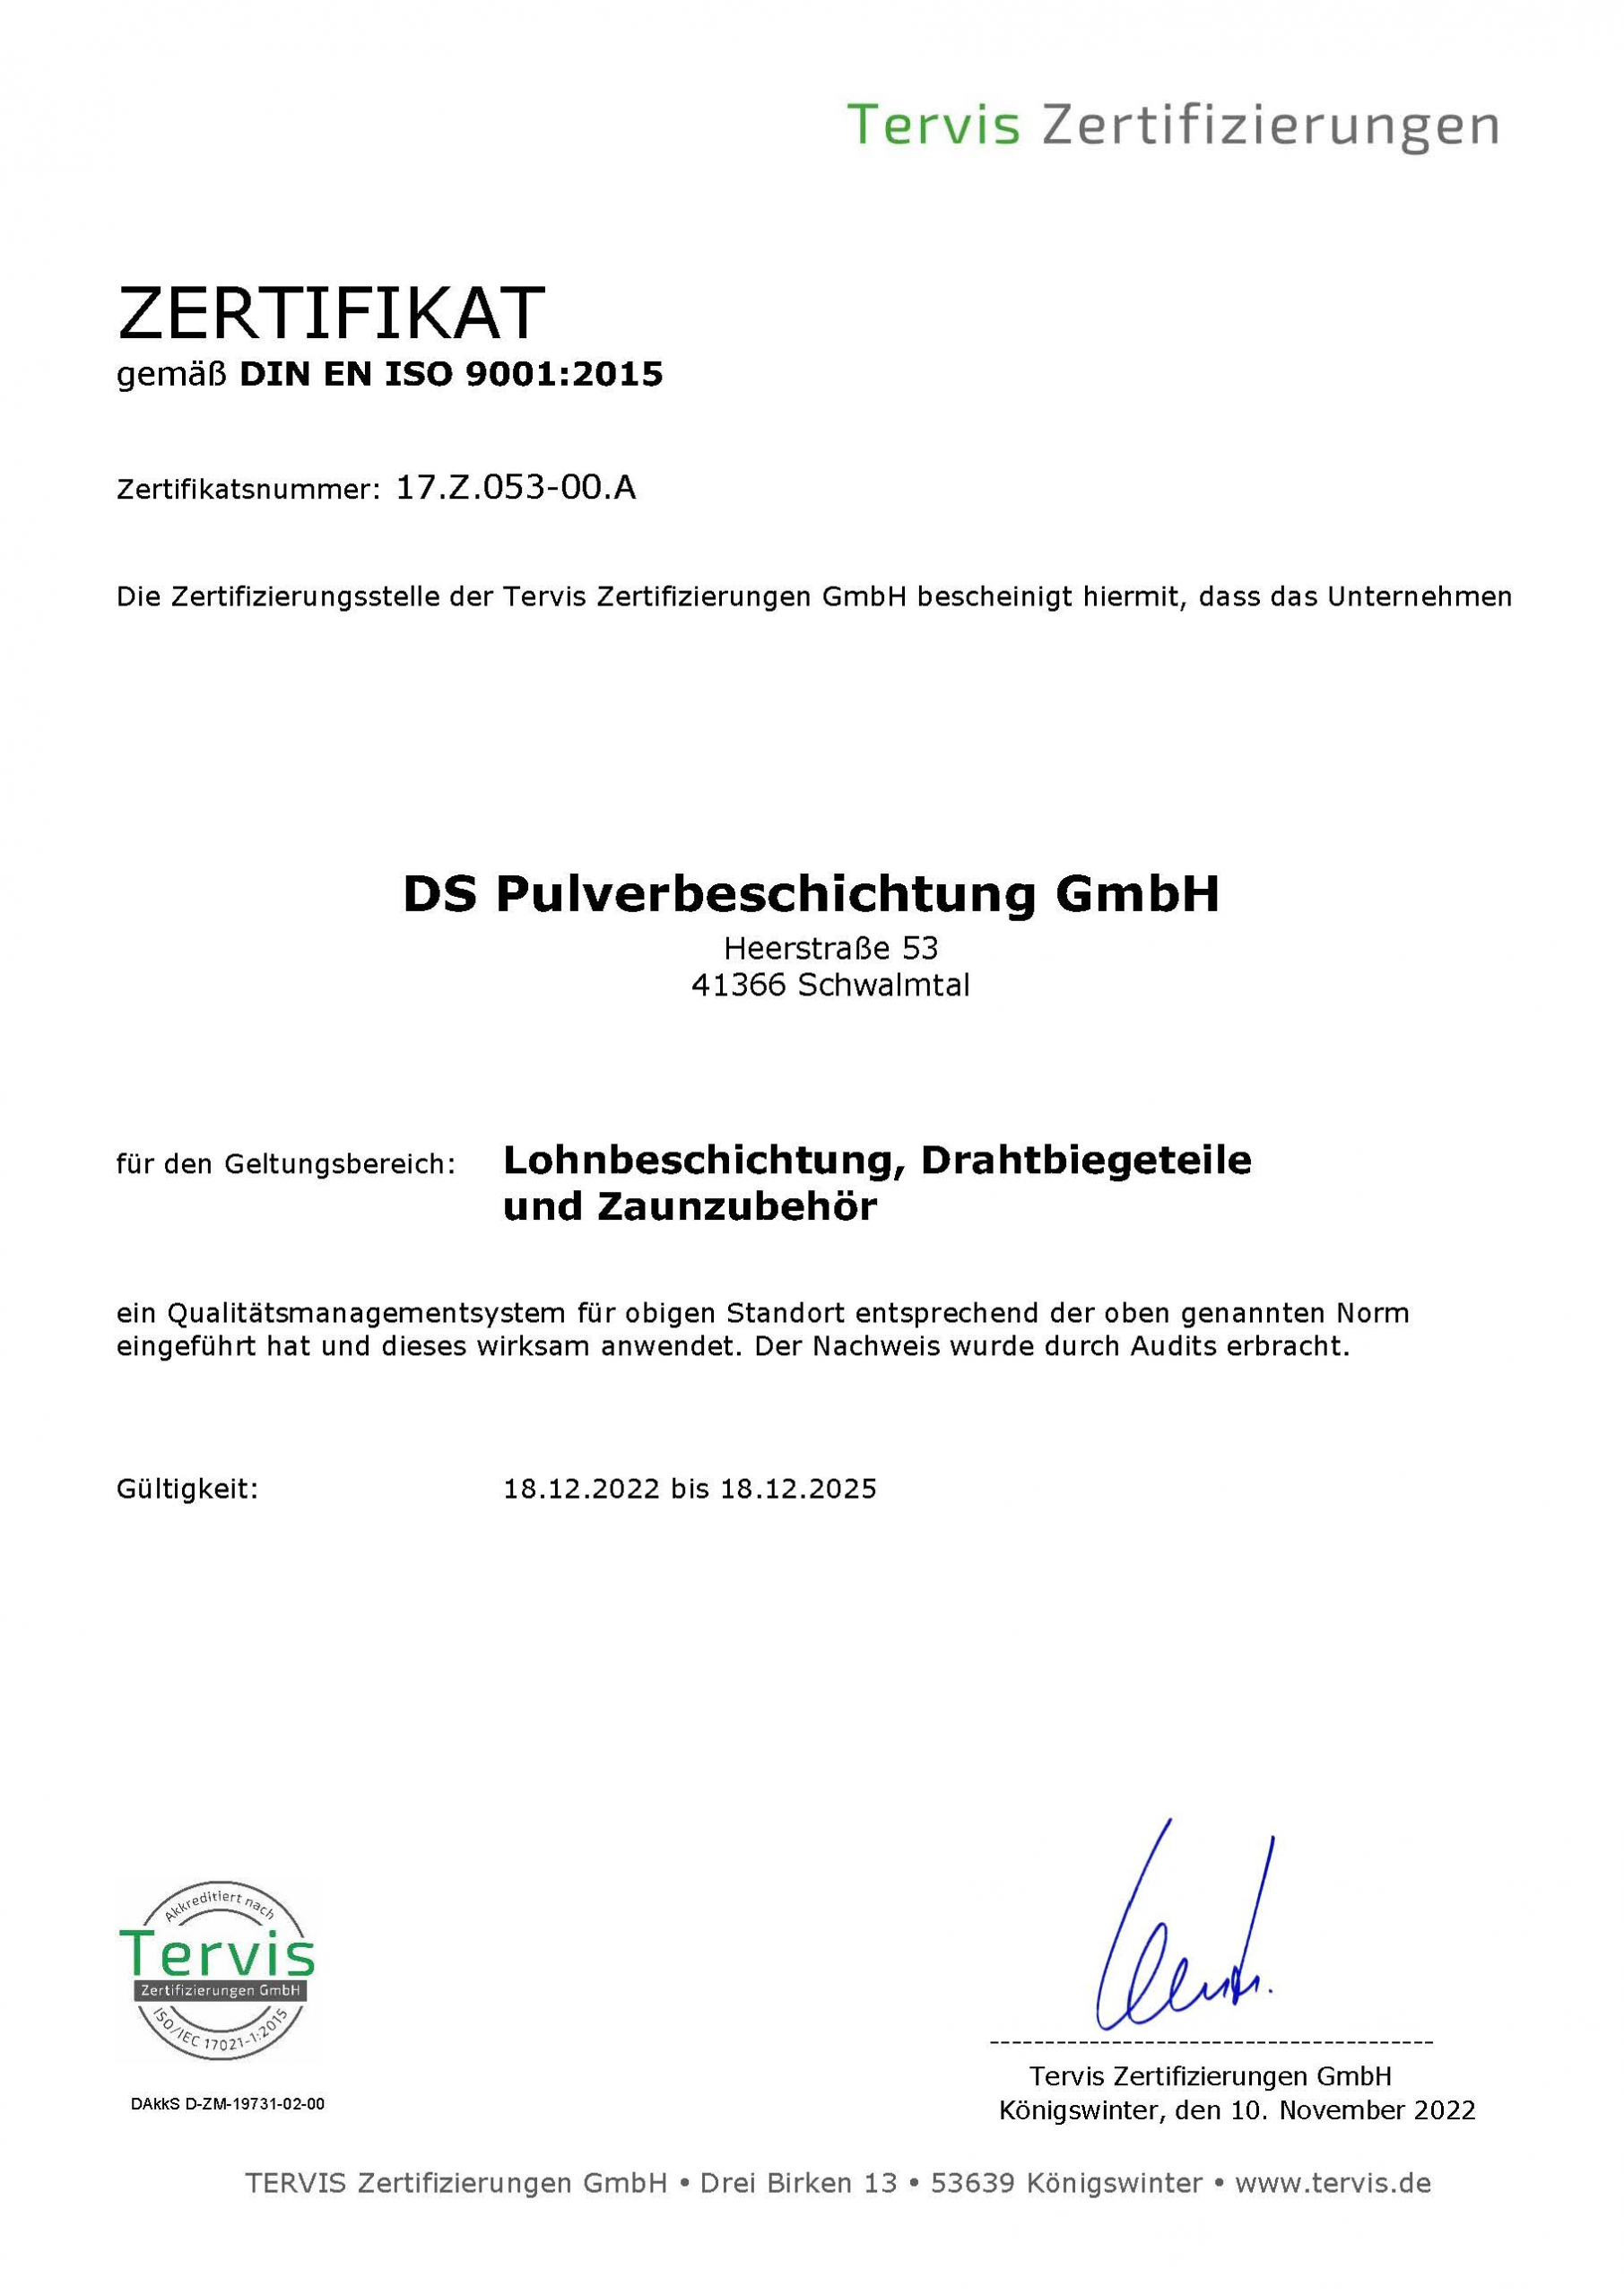 Zertifikat gemäß DIN EN ISO 9001:2015 Qualitätsmanagementsystem DS Pulverbeschichtung GmbH